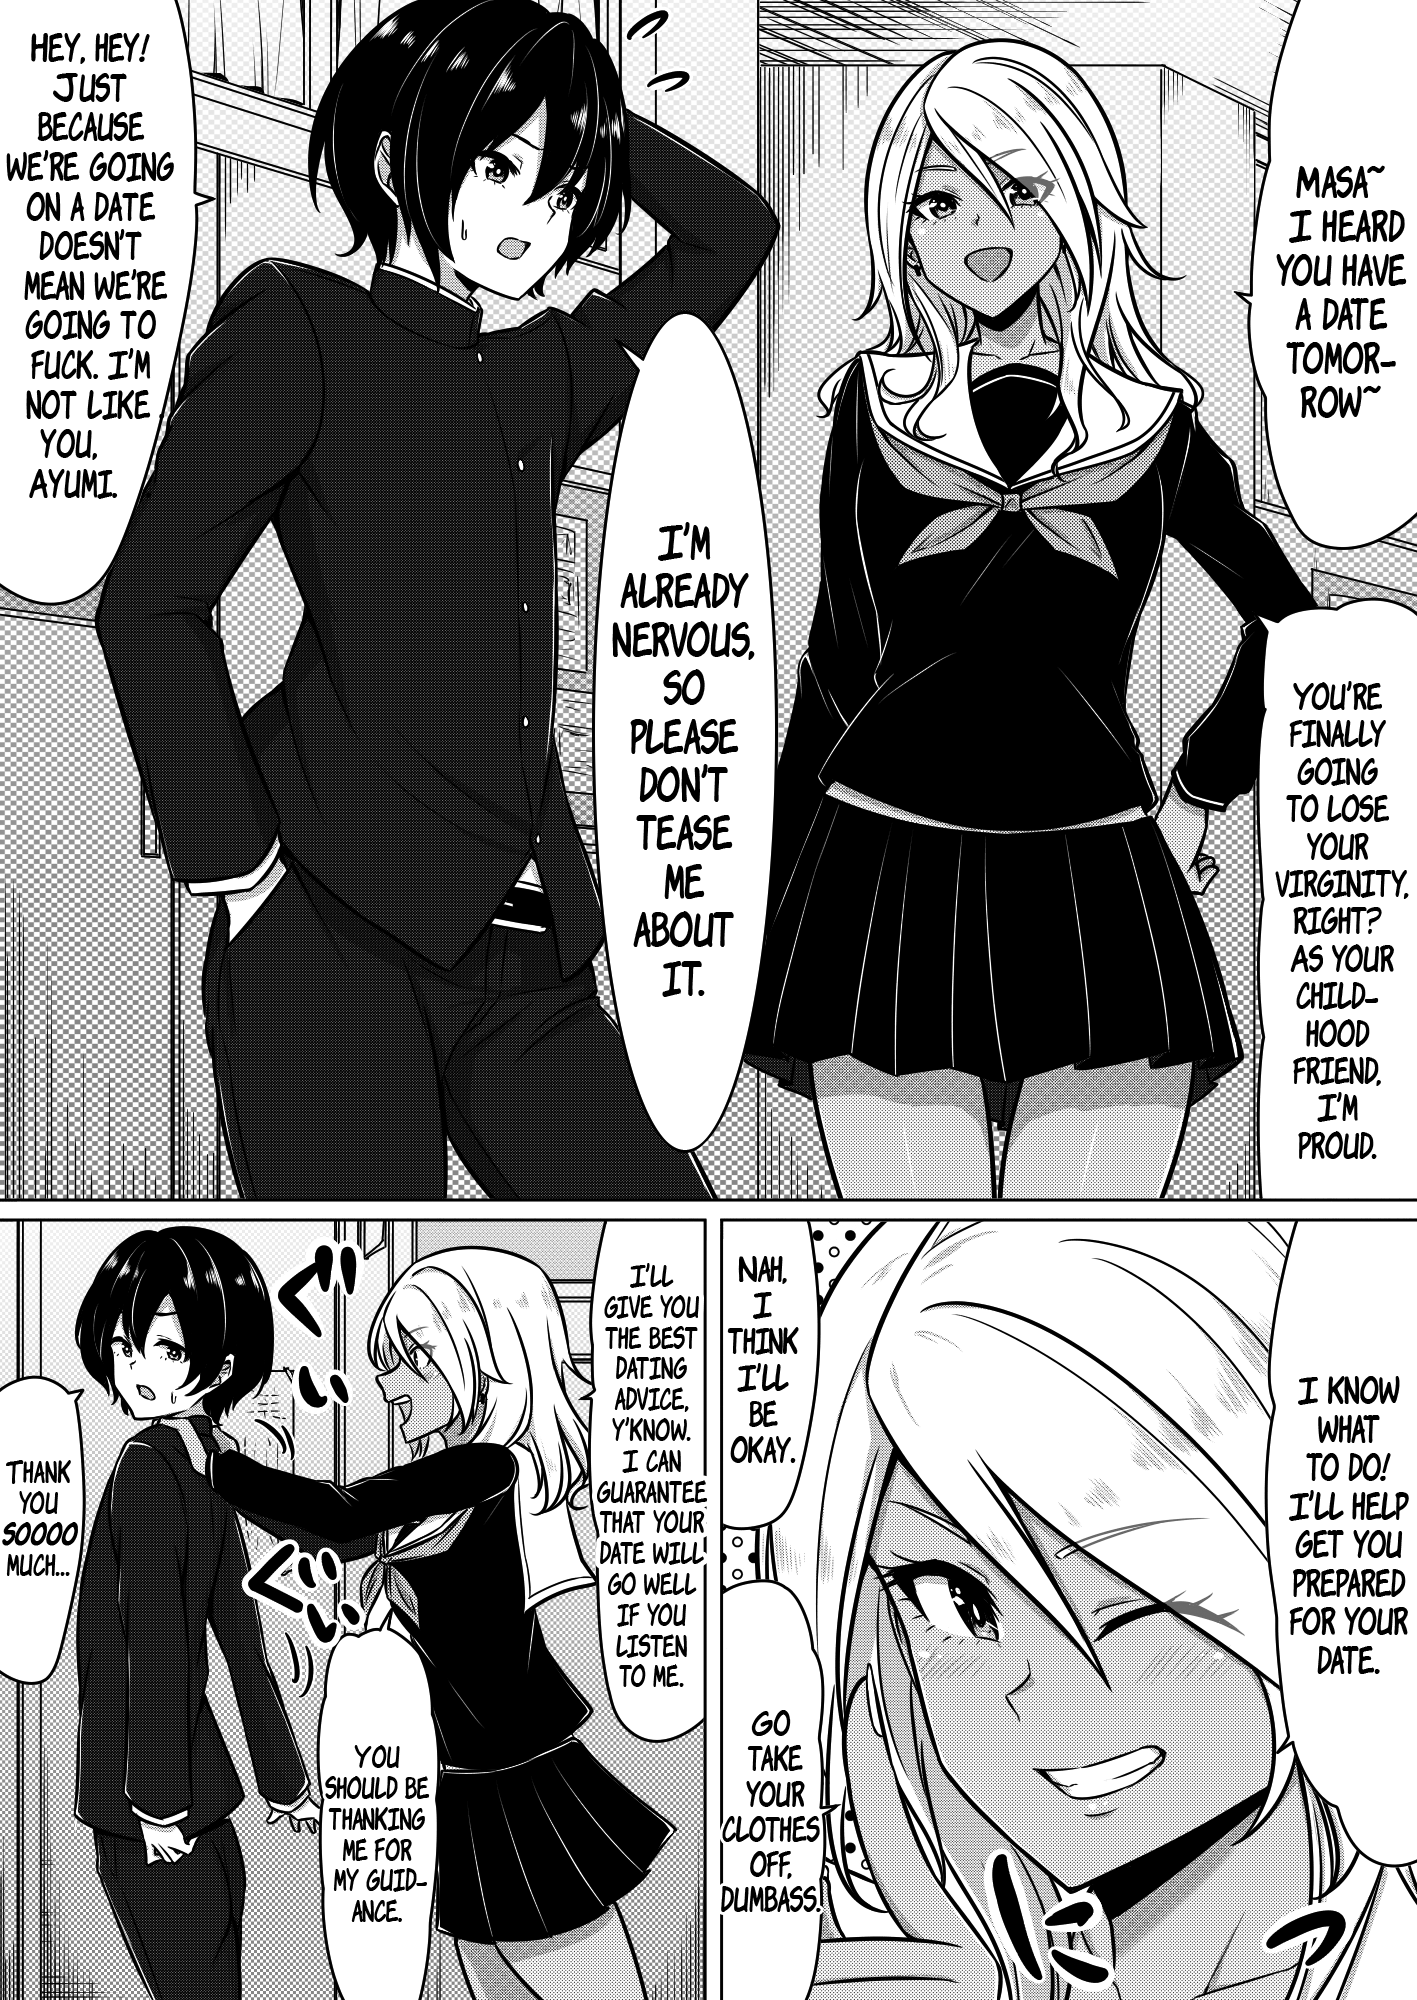 A Girl Giving Date Advice manga